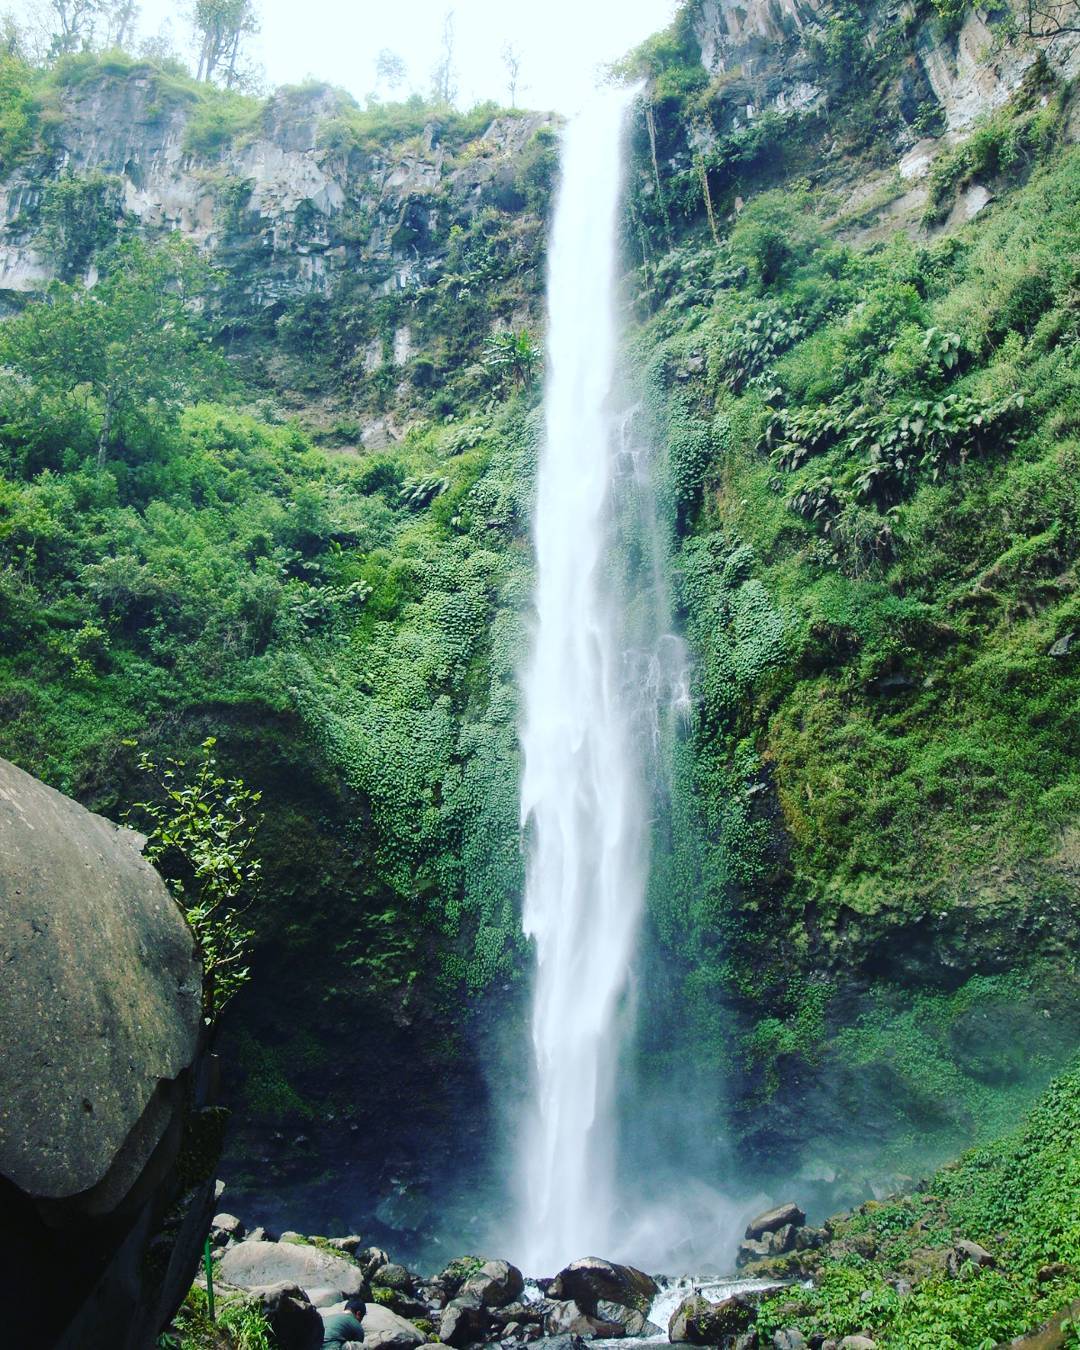 10 iGambari iCobani iRondoi Malang Harga Tiket Masuk Lokasi Wisata Waterfall Misteri JejakPiknik com